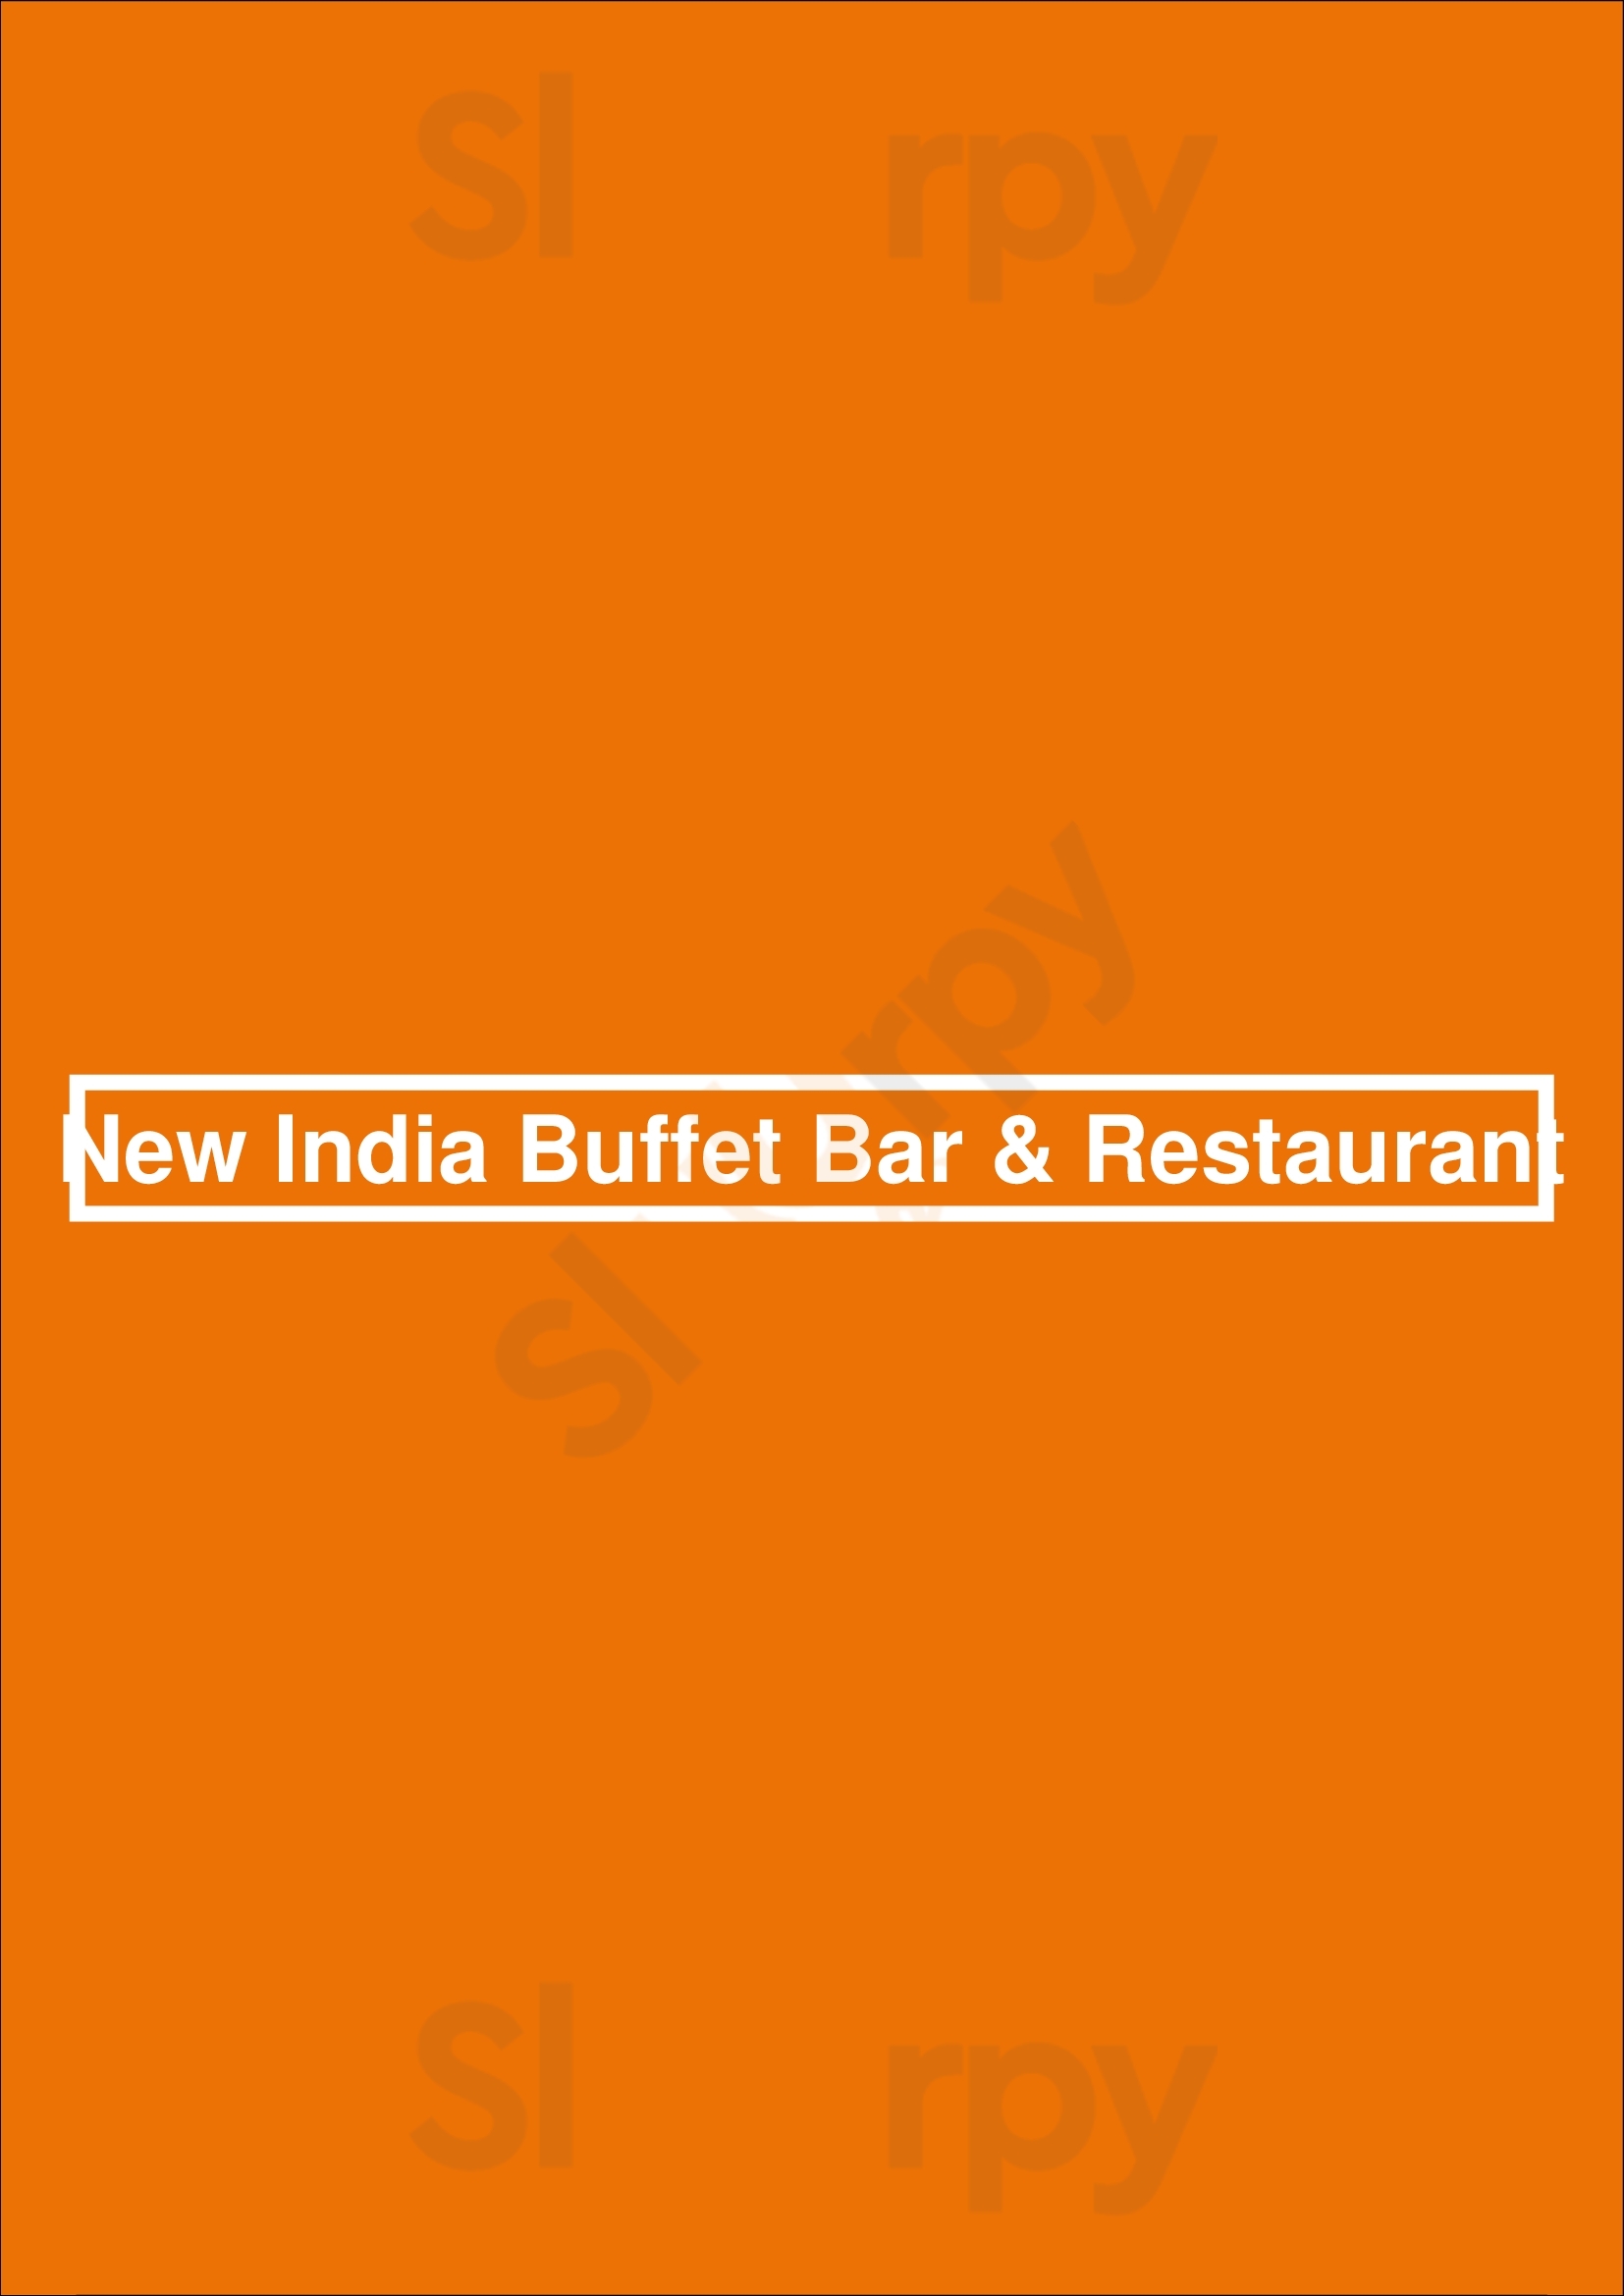 New India Buffet Bar & Restaurant Vancouver Menu - 1